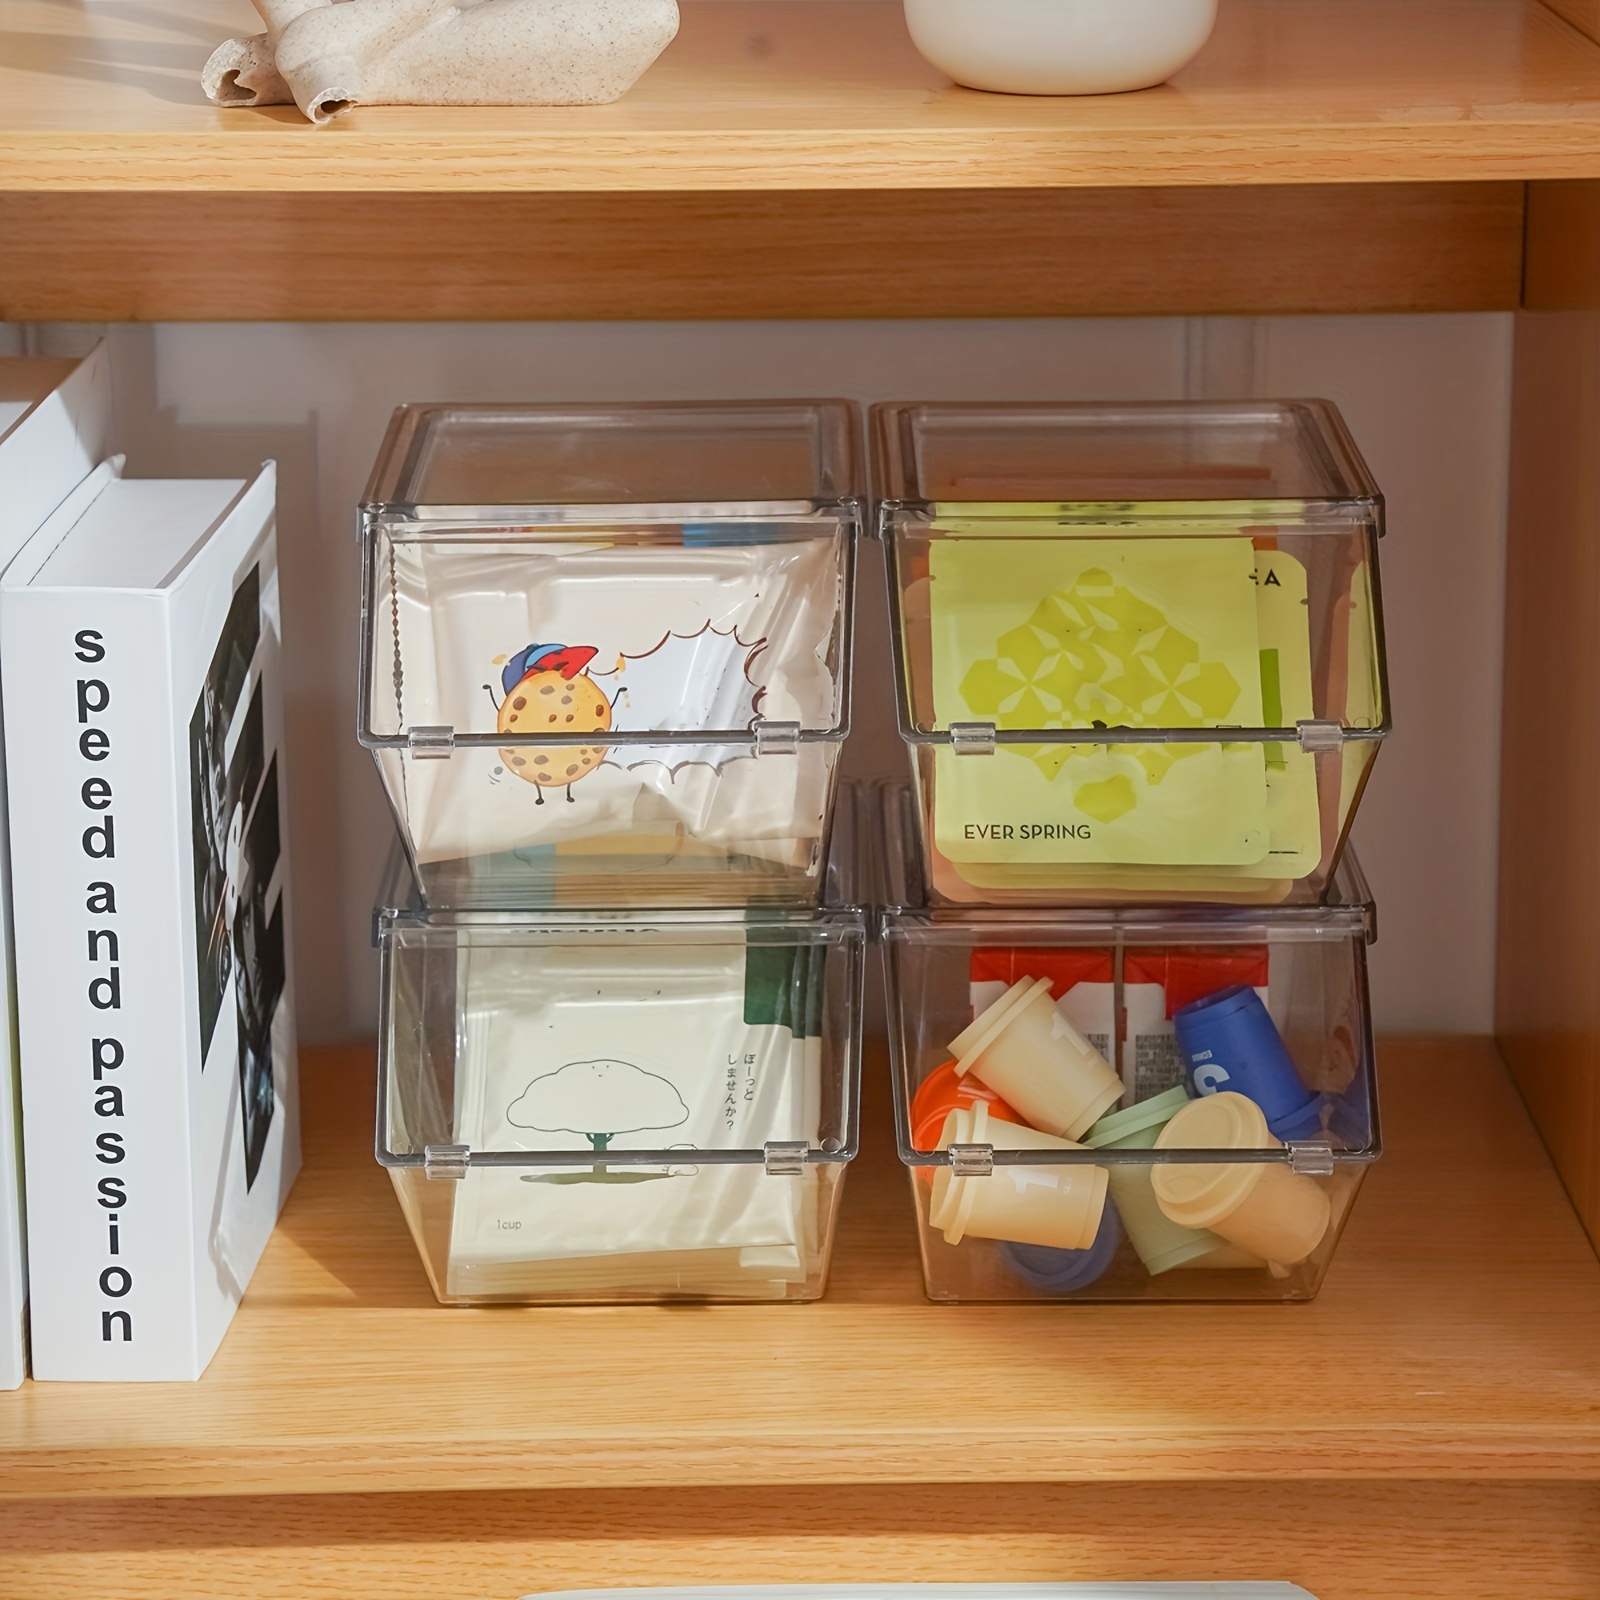 Casewin Plastic Storage Boxes, Multiple Colour Organisation